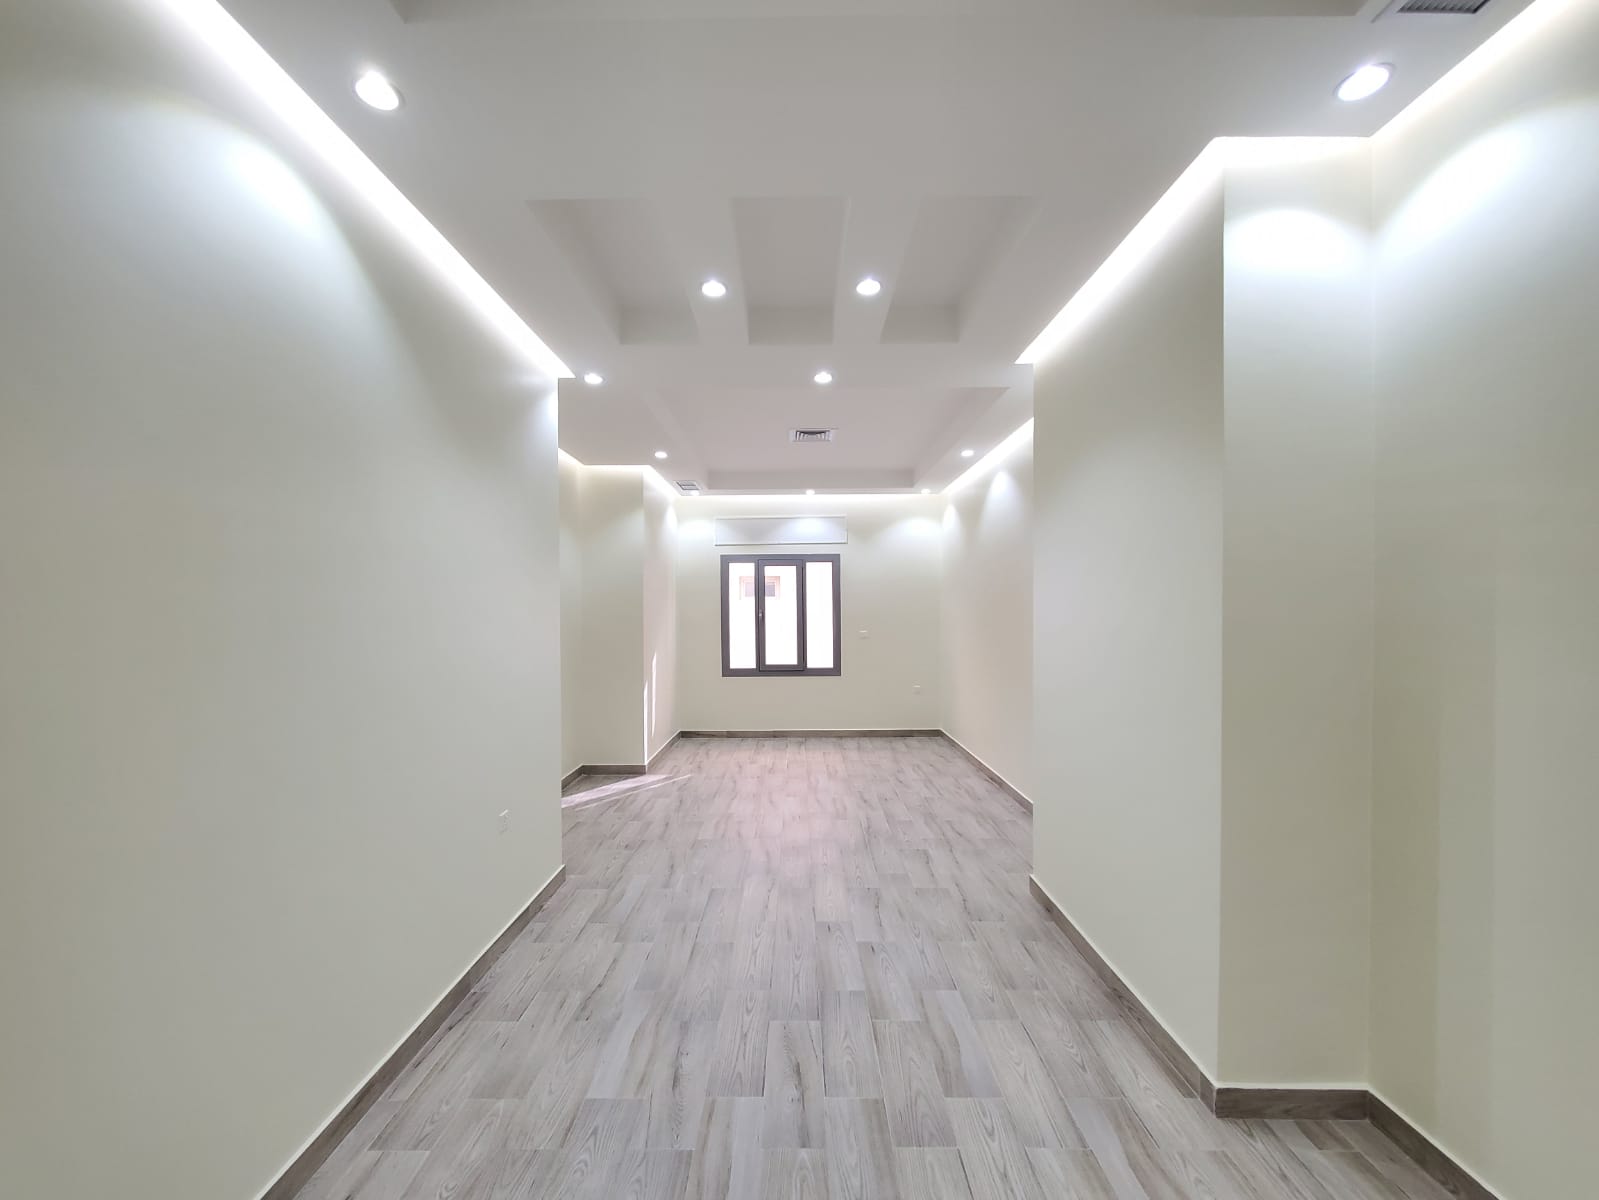 Abu Fatira – new, unfurnished three bedroom apartments